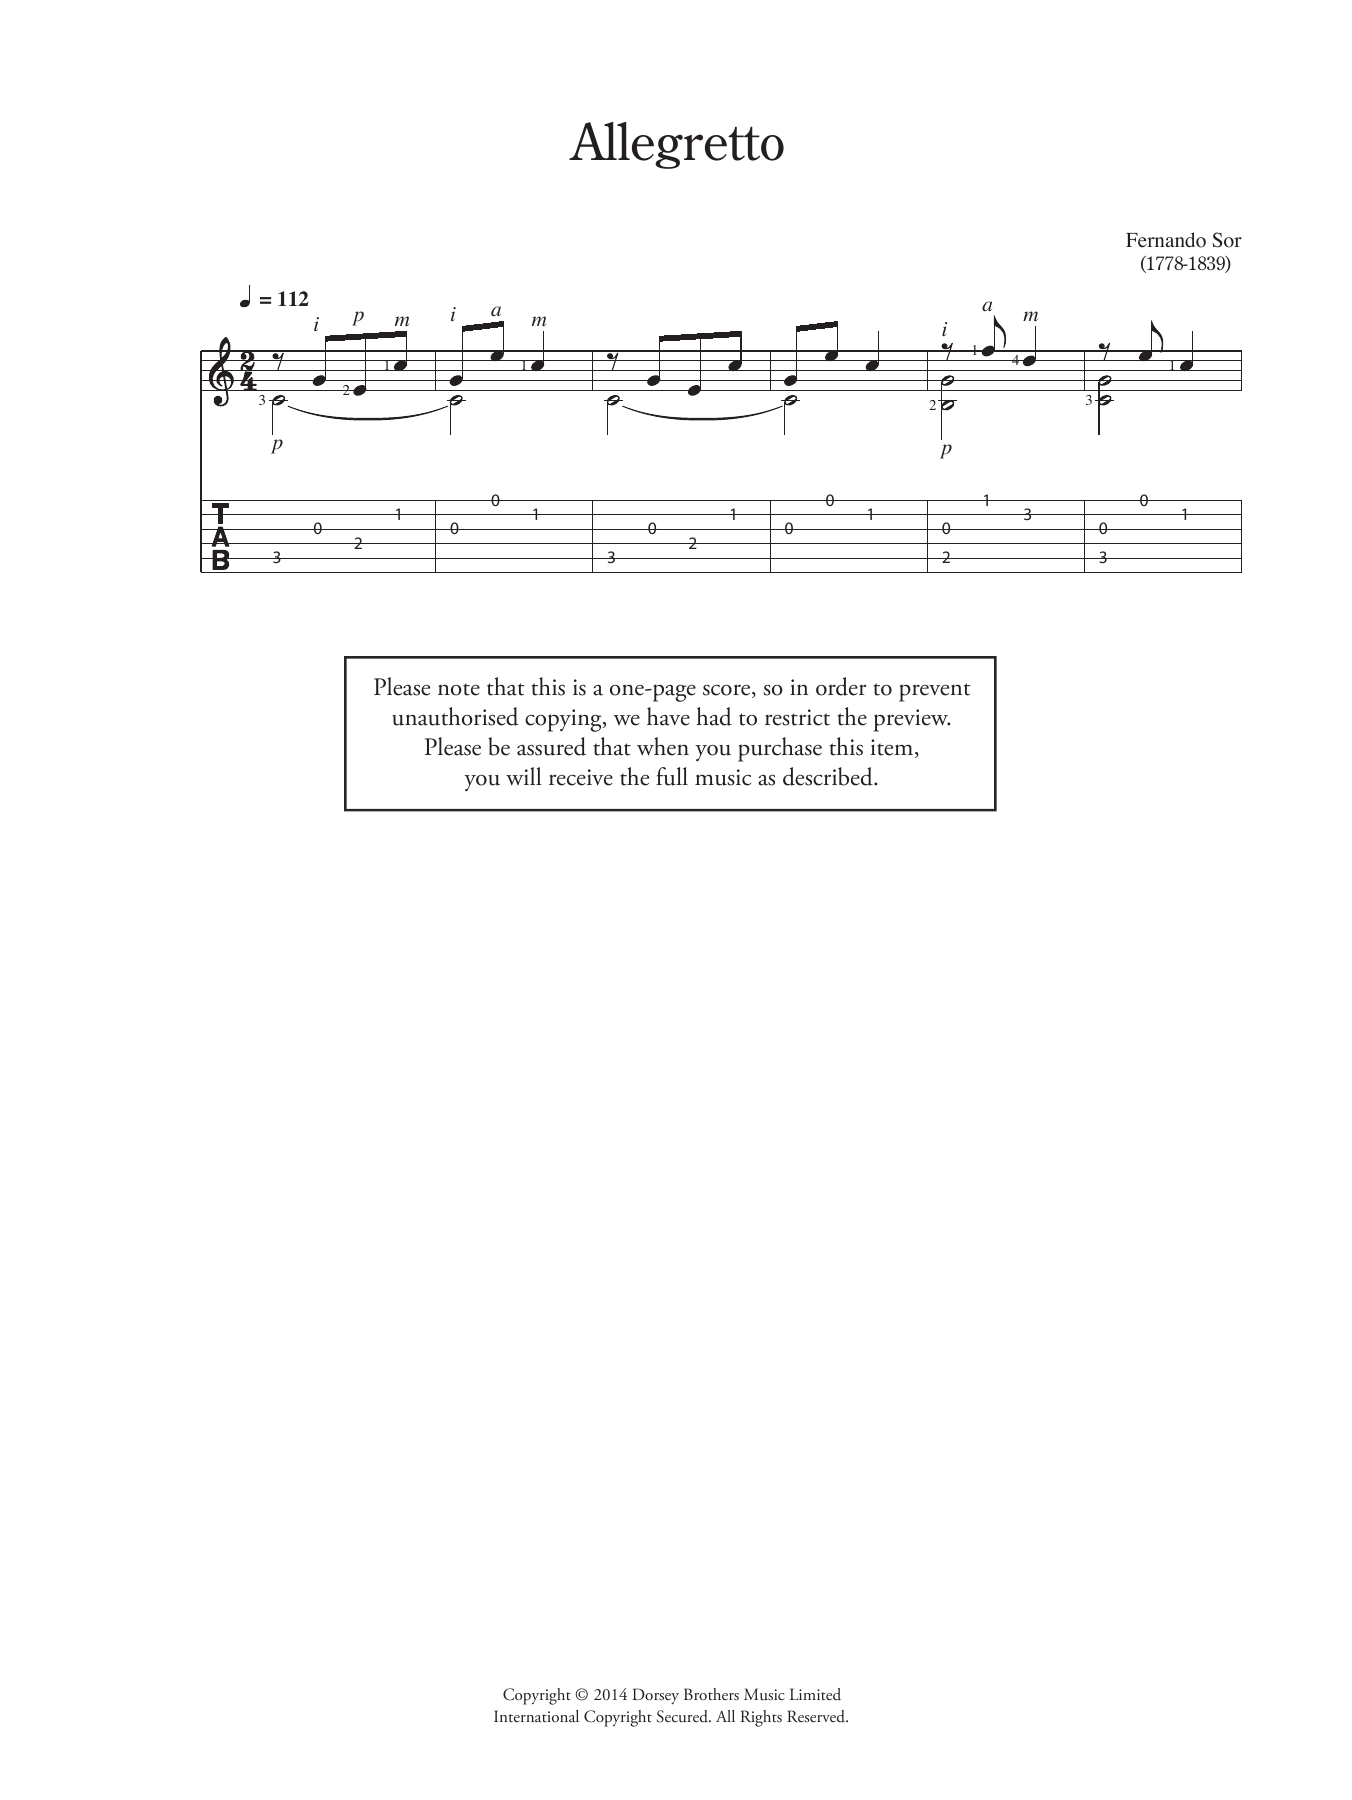 Fernando Sor Allegretto Sheet Music Notes & Chords for Guitar - Download or Print PDF